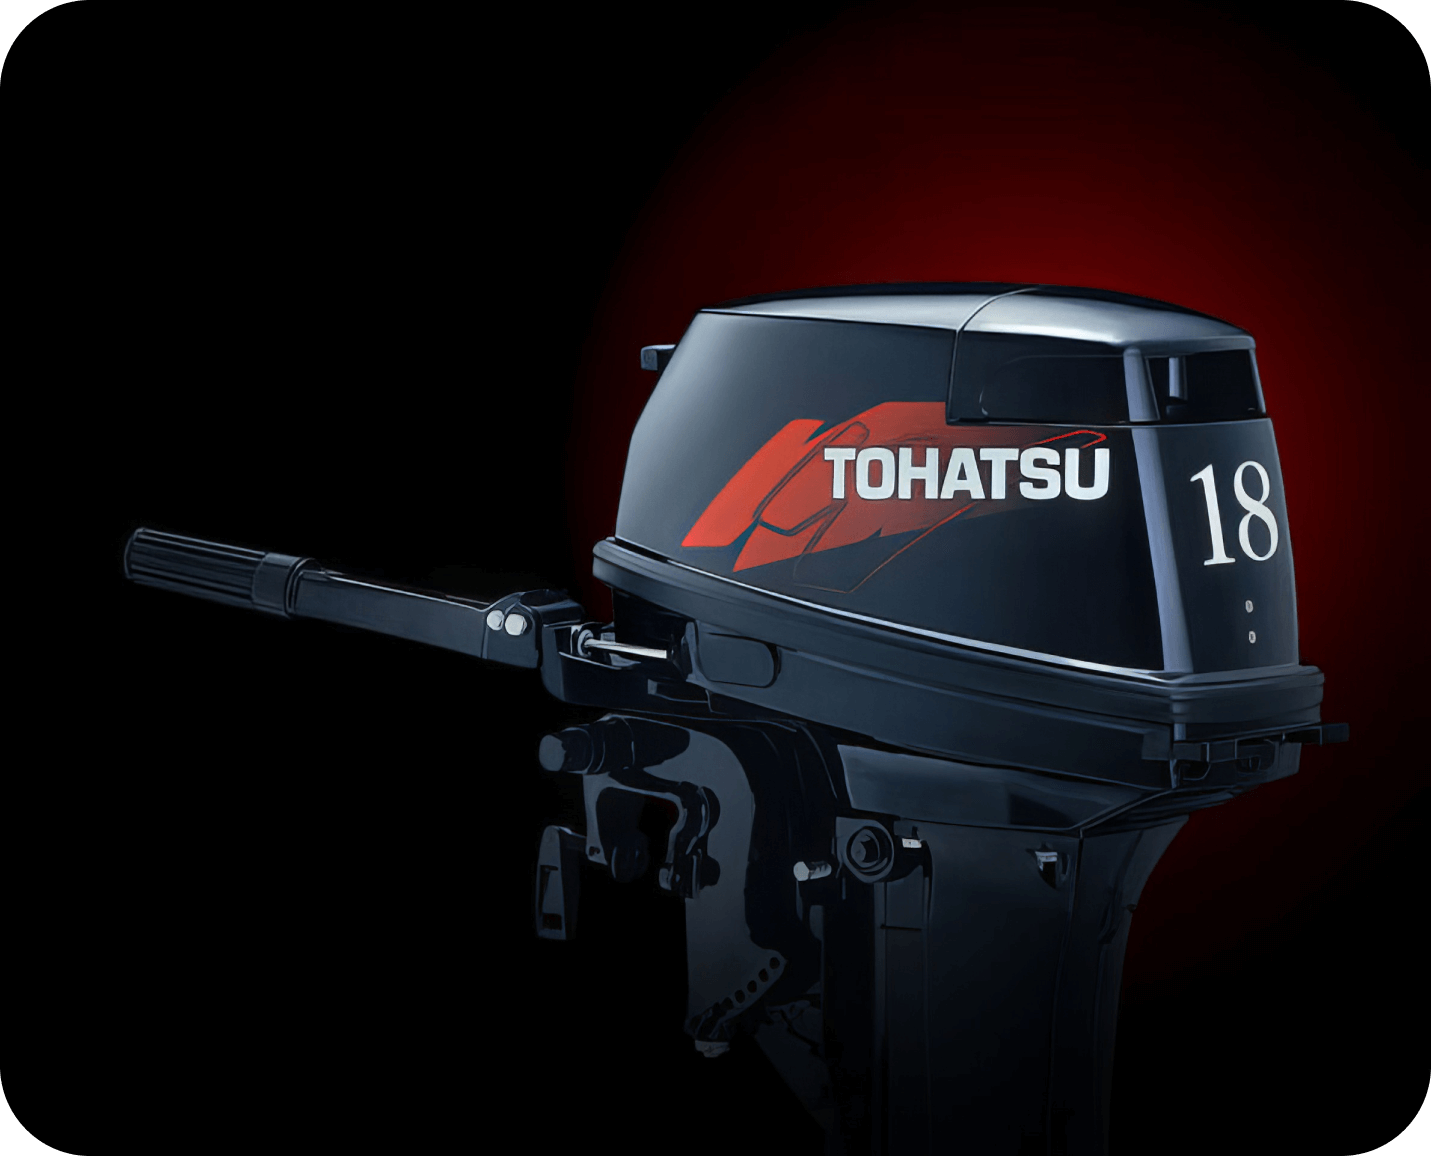 Лодочный мотор Tohatsu 18. Лодочный мотор Tohatsu m 18e2 s. Tohatsu m 18 e2 s. Tohatsu 9.9 и 18.